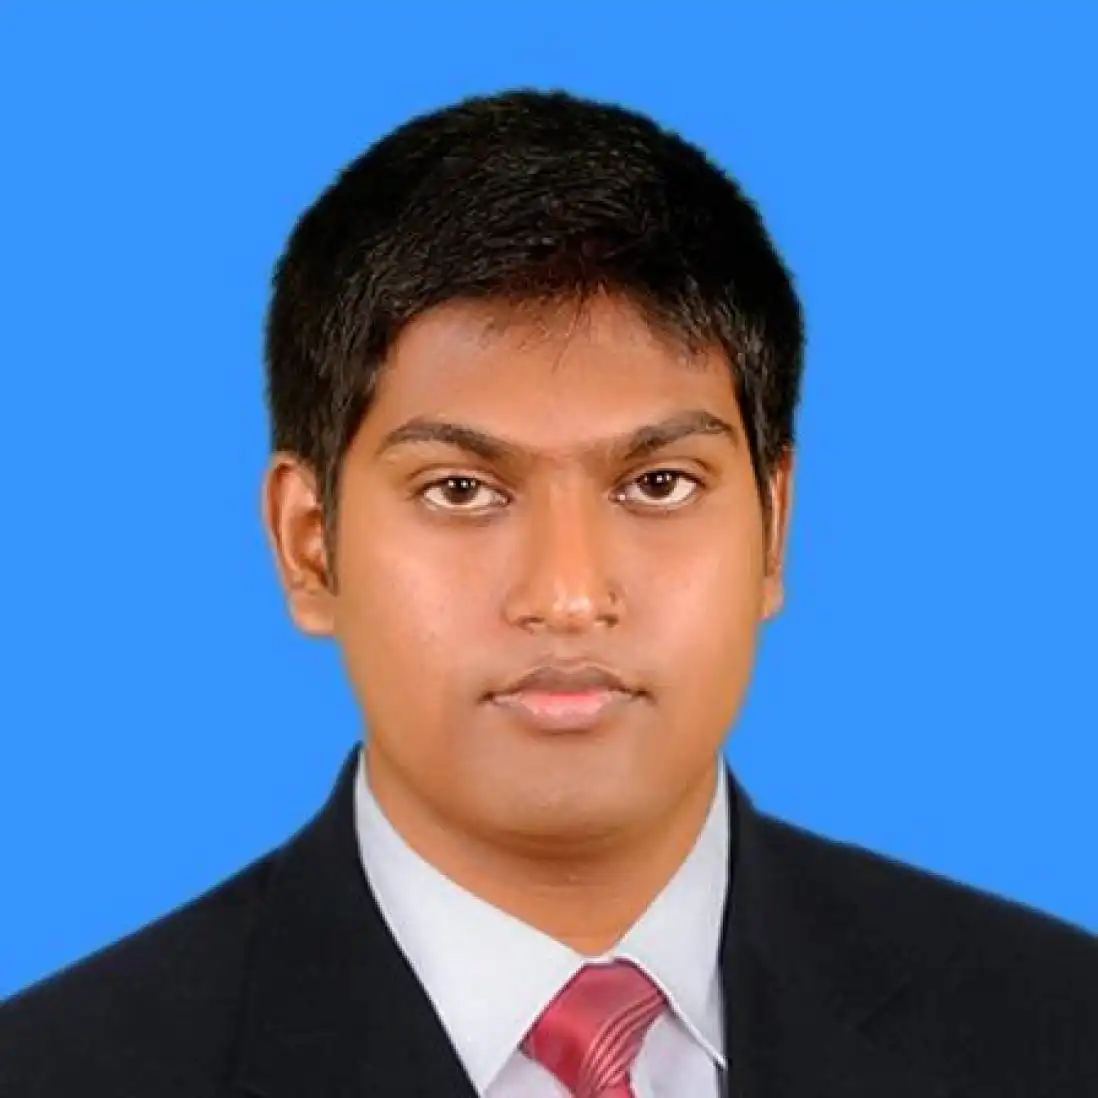 shafiq profile image